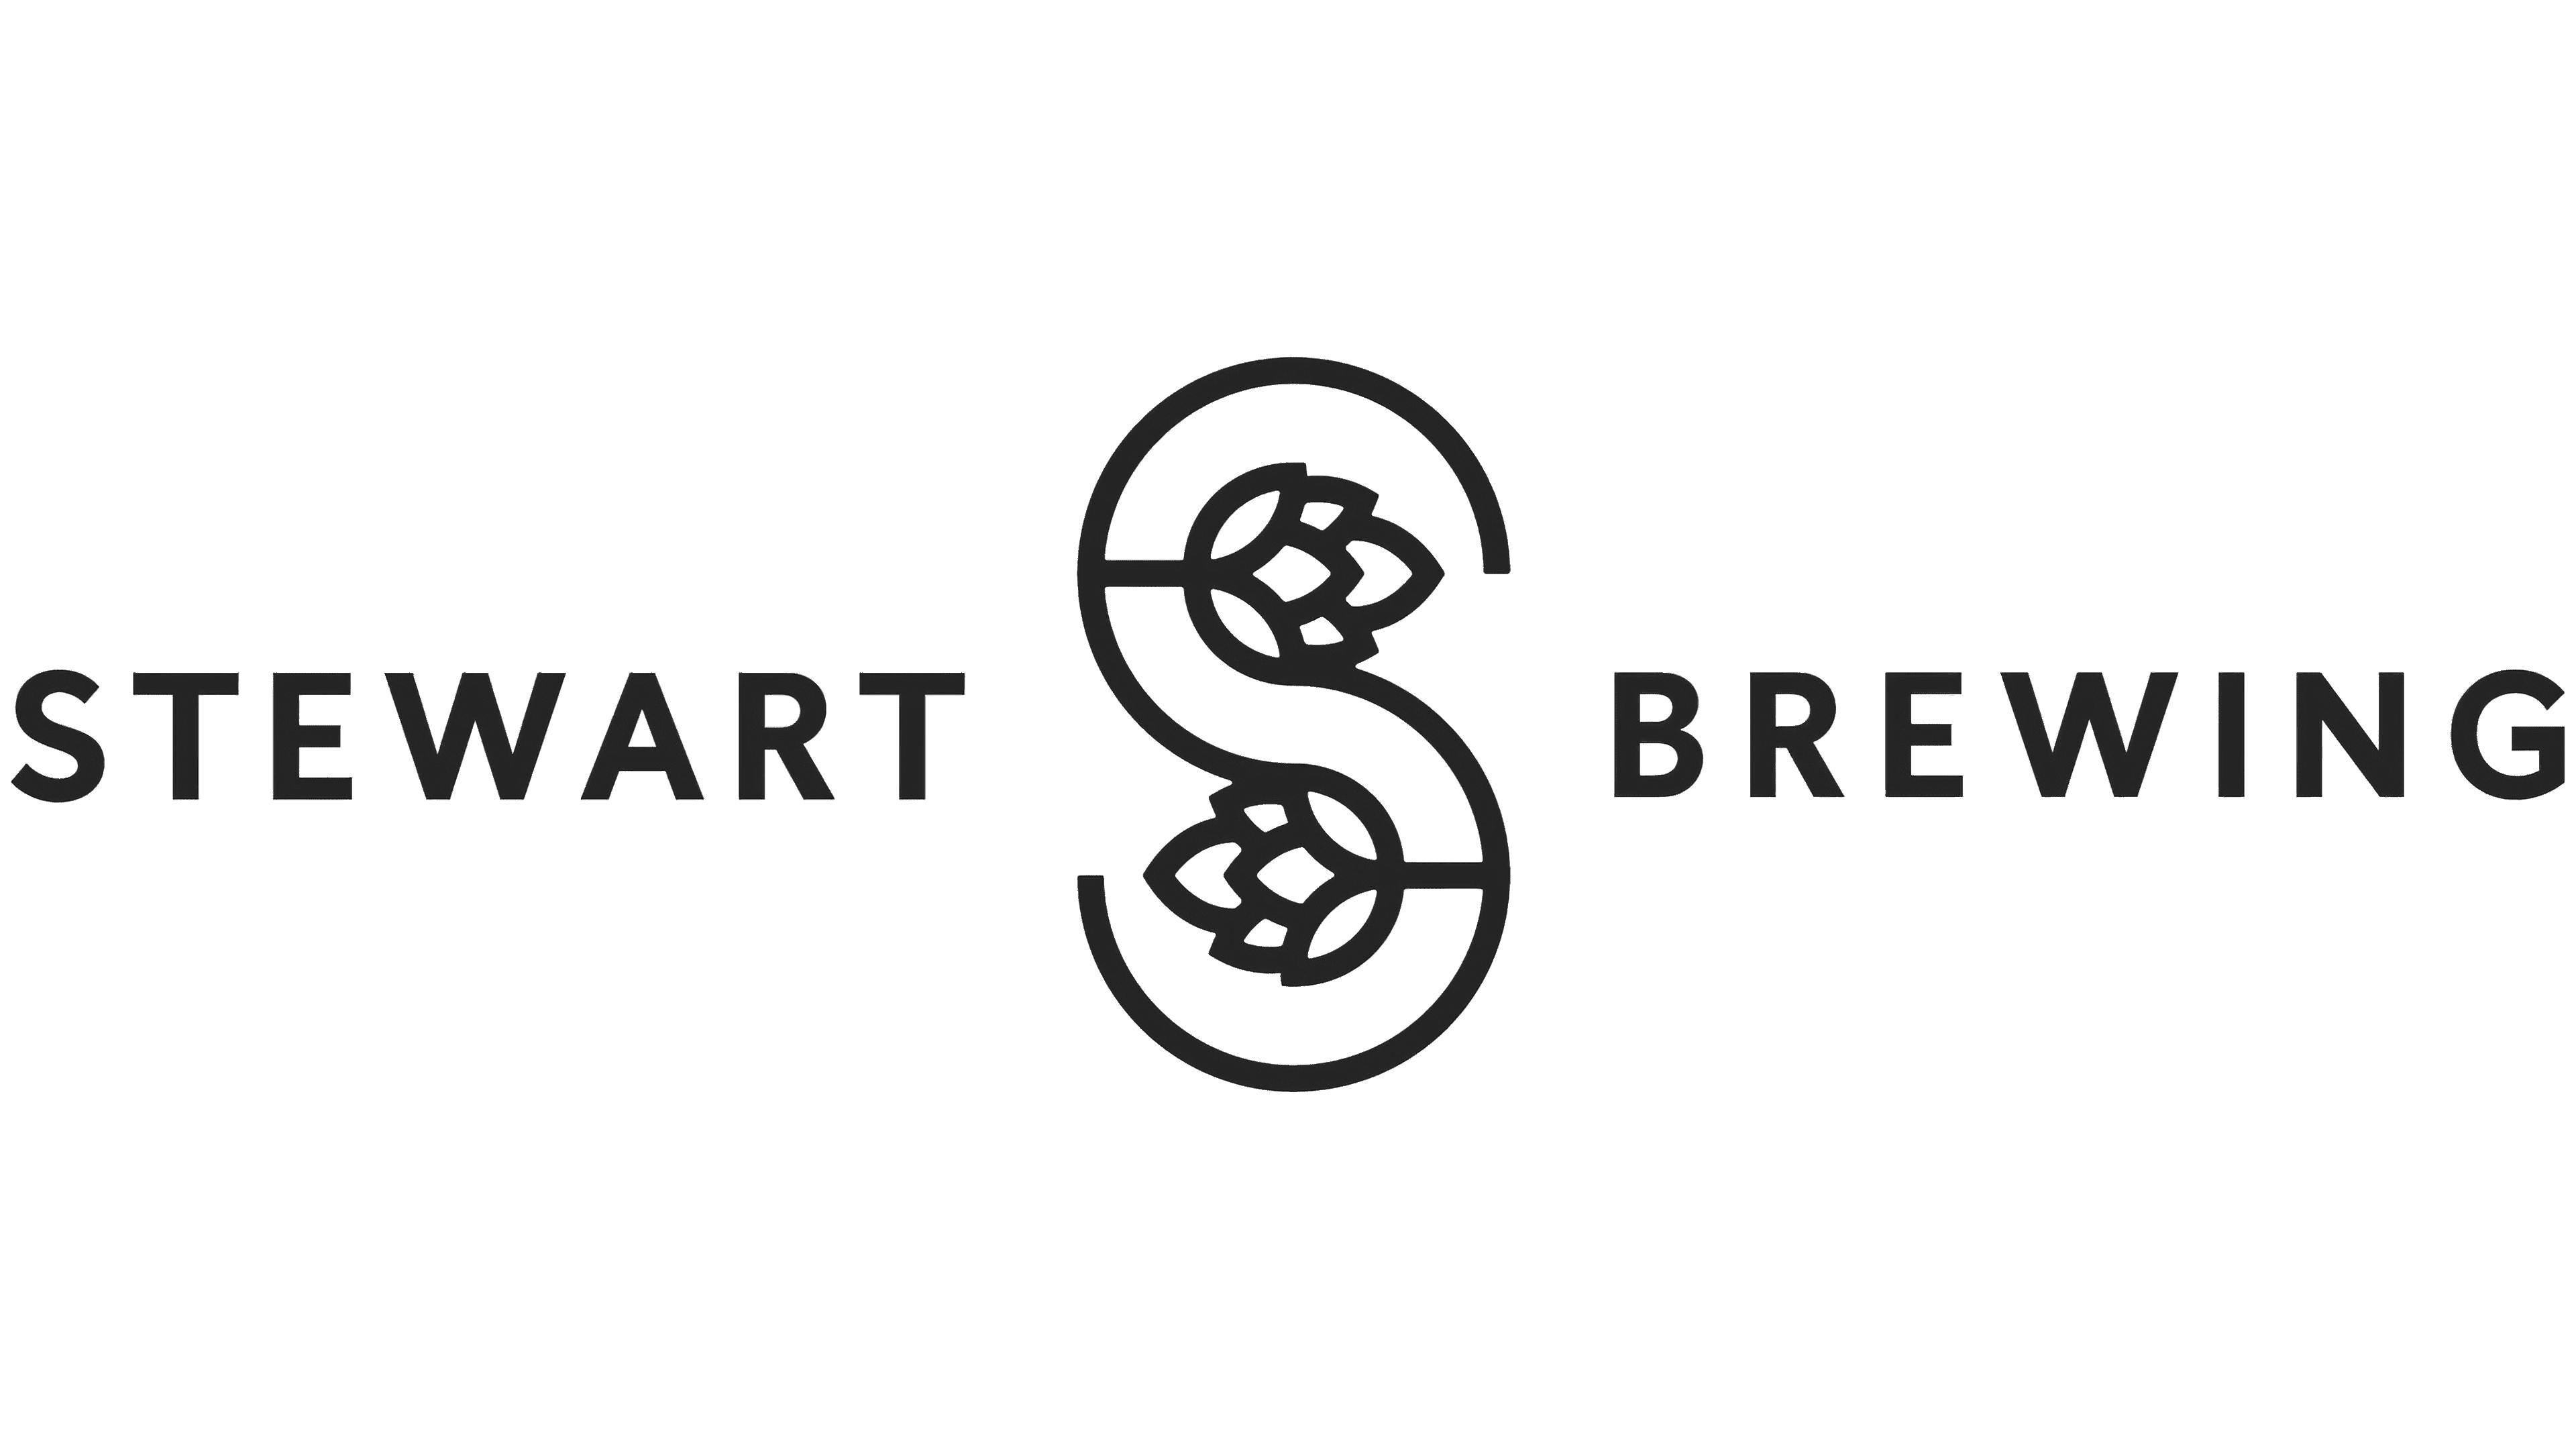 Stewart-Brewing-New-Logo.png